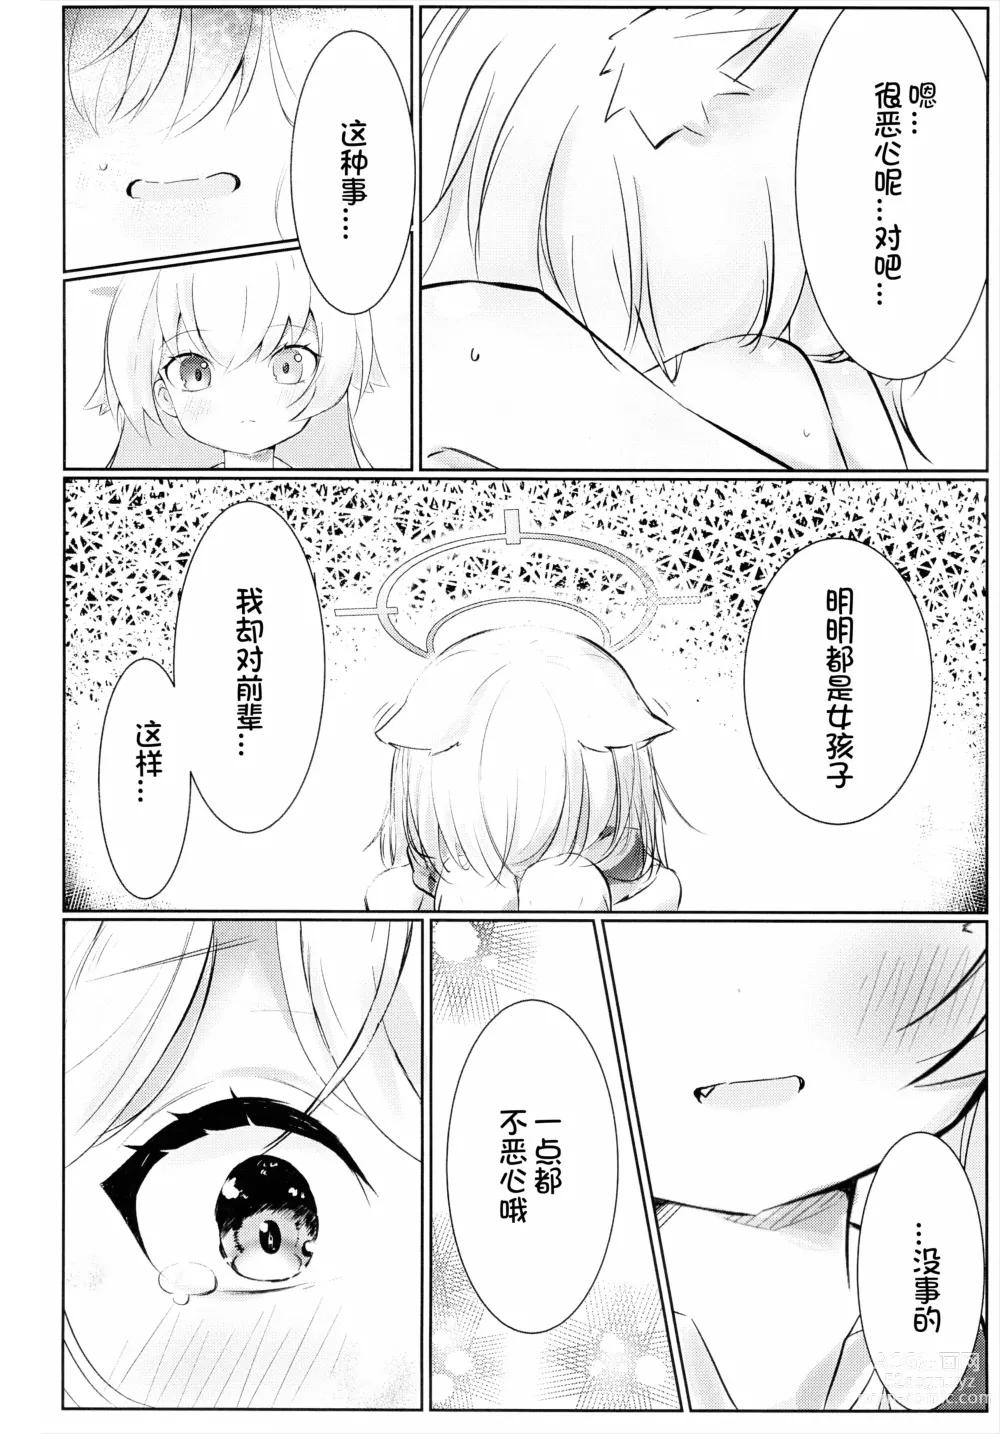 Page 18 of doujinshi Hakusyoku Aisei